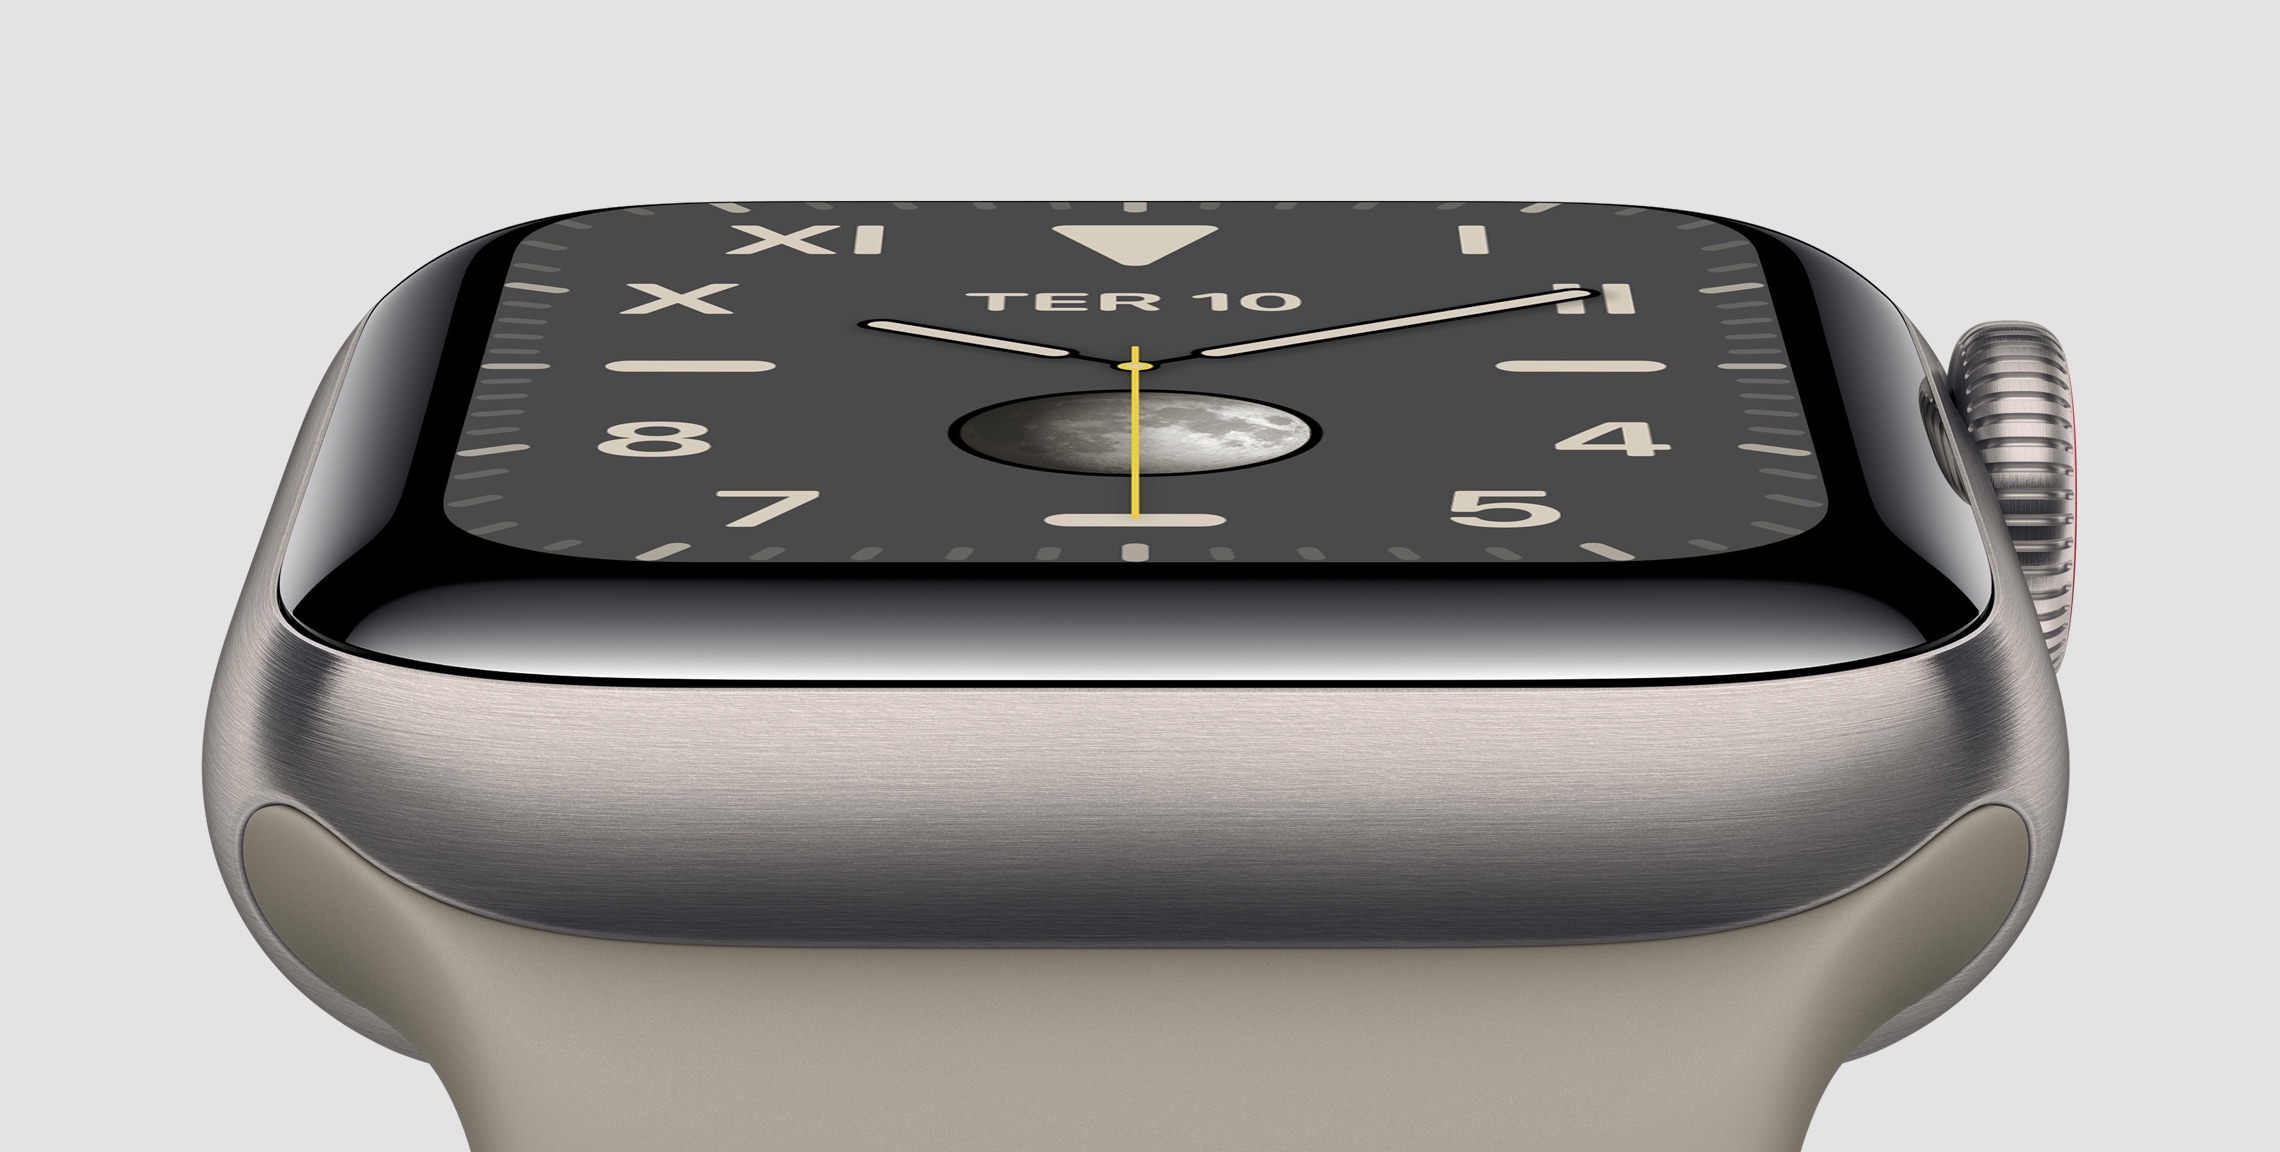 Apple Watch Series 5 is on pre-order in Brazil